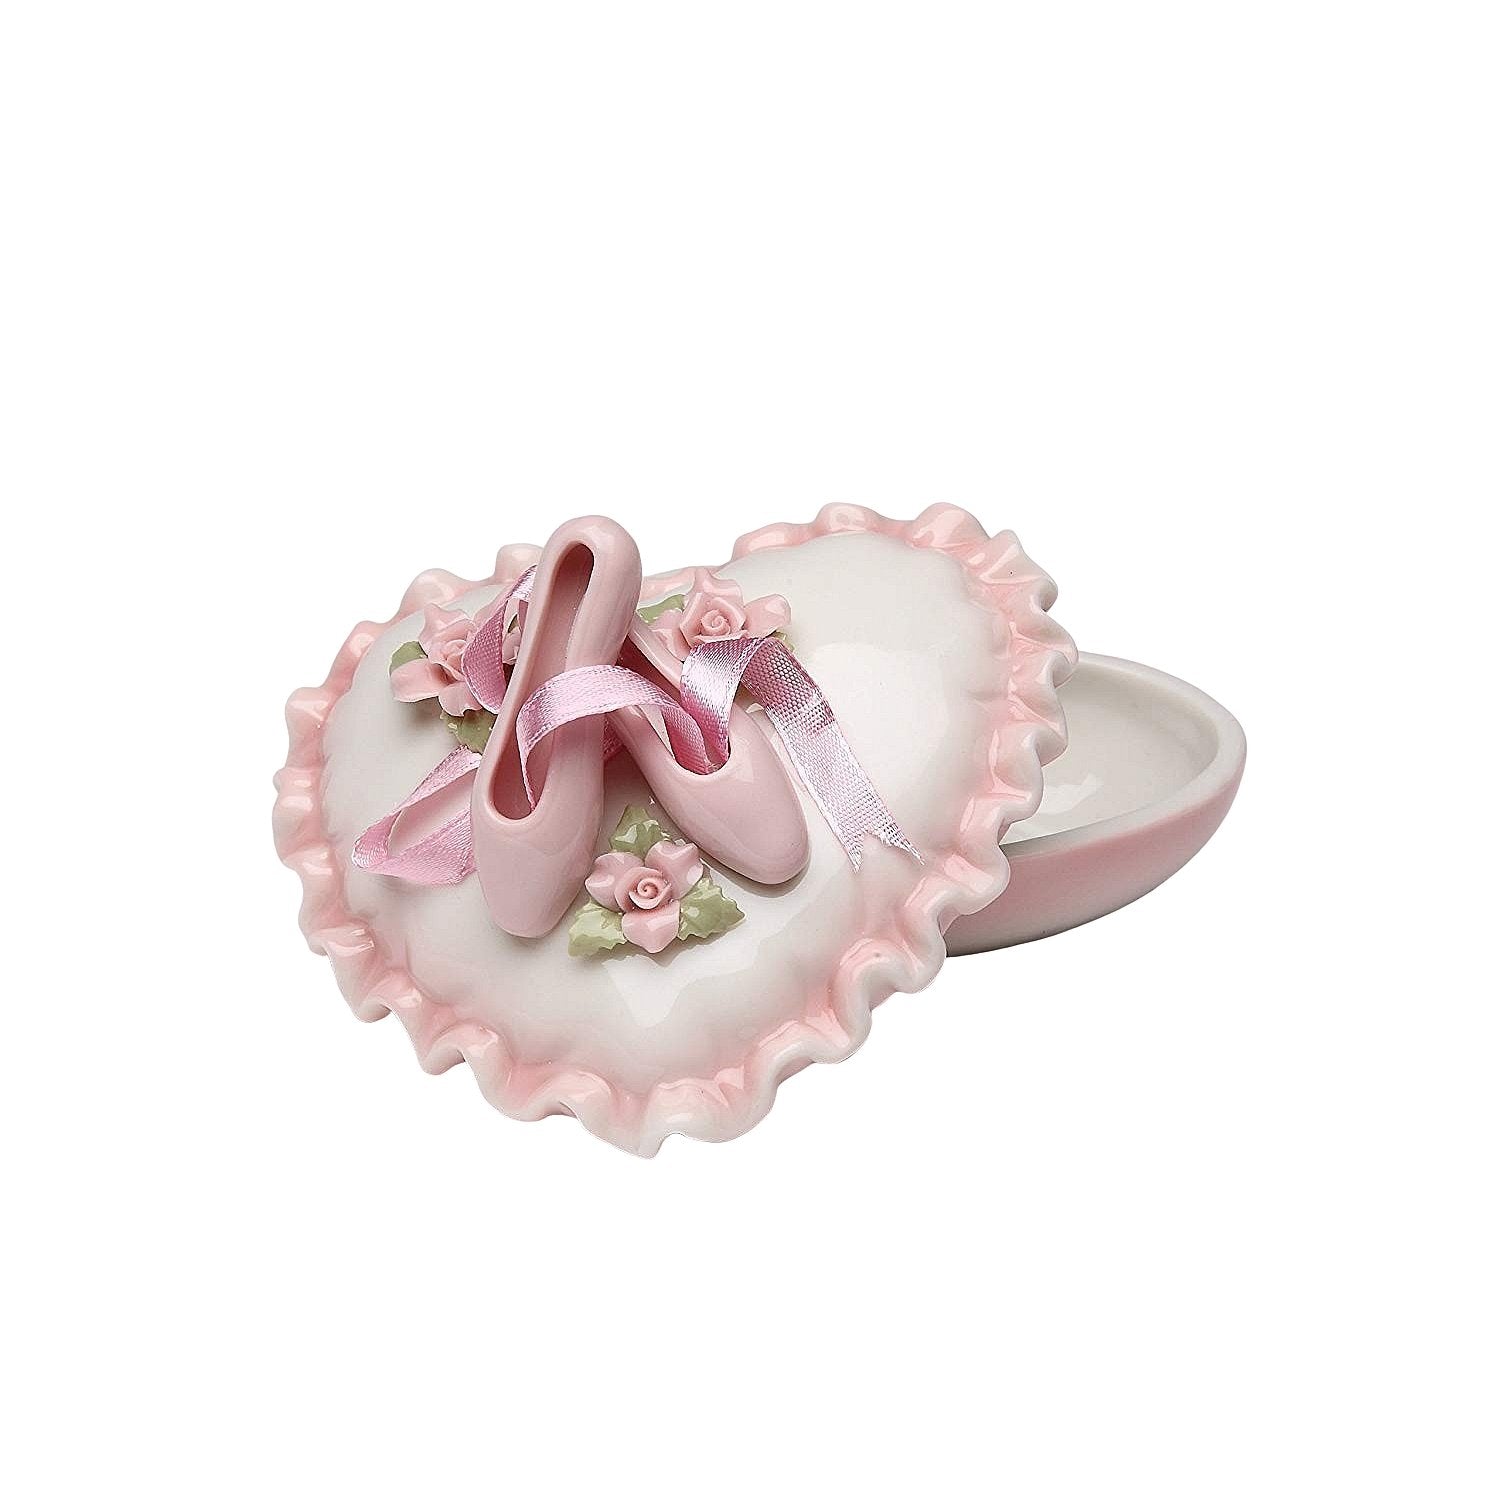 2 of 2: Ballerina Heart Shaped Porcelain Keepsake Box by Cosmos Gifts